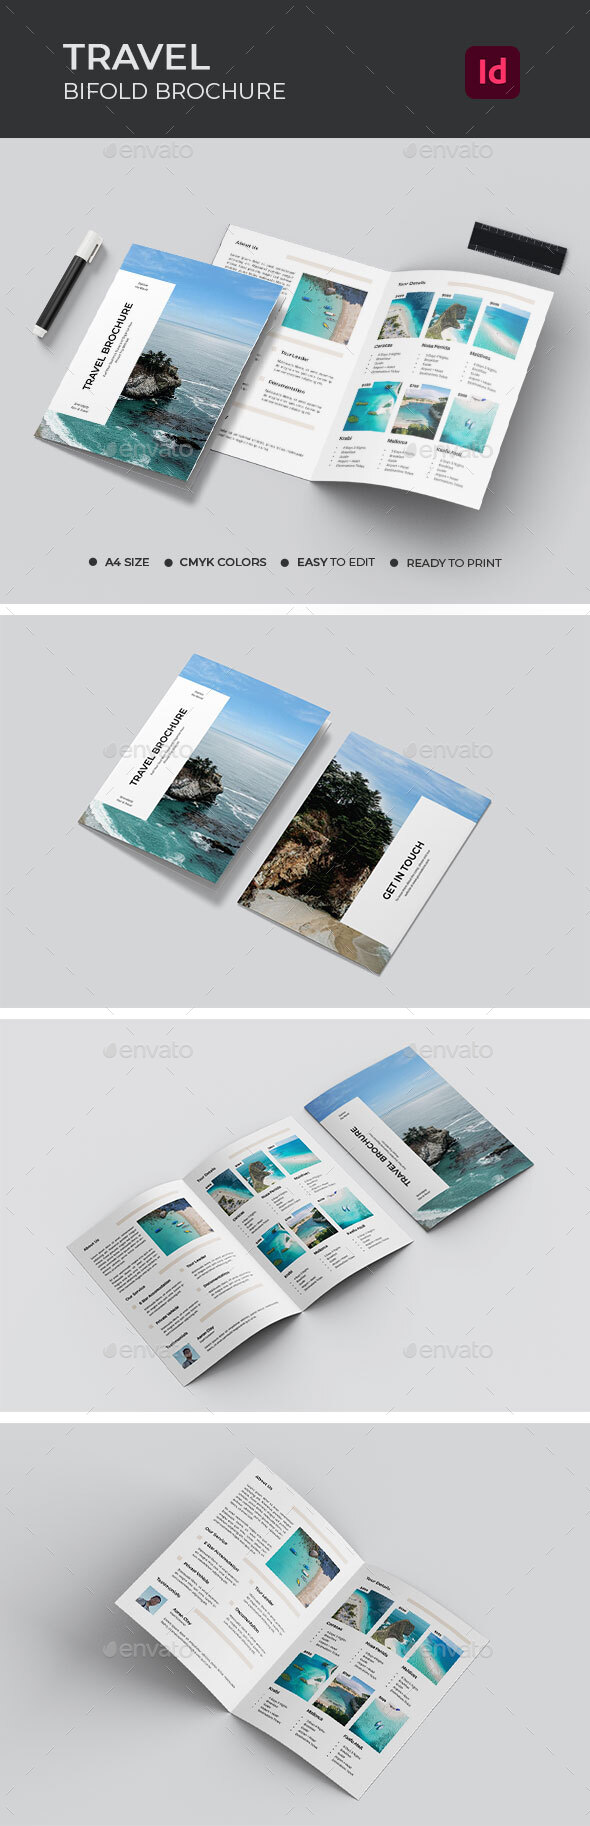 Travel Agent Bifold Brochure